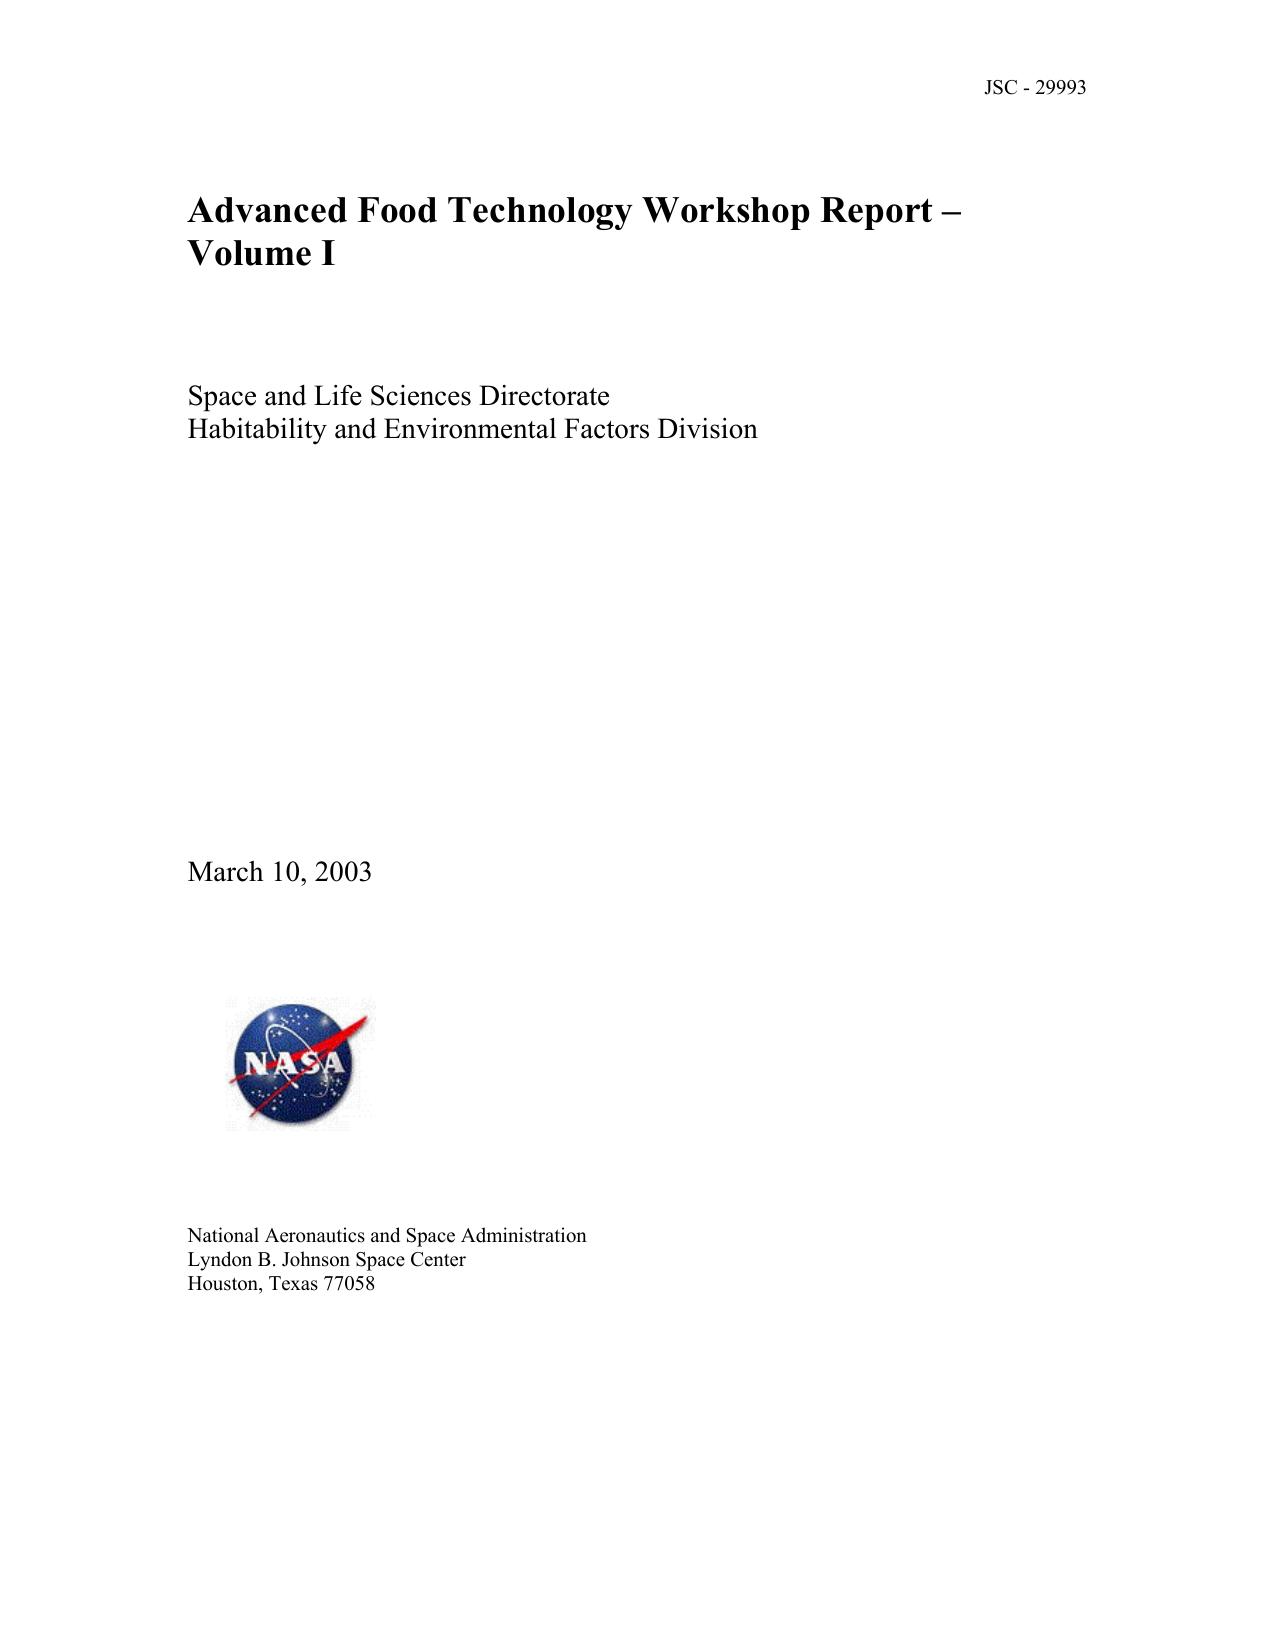 Microsoft Word - Final report vol1.doc